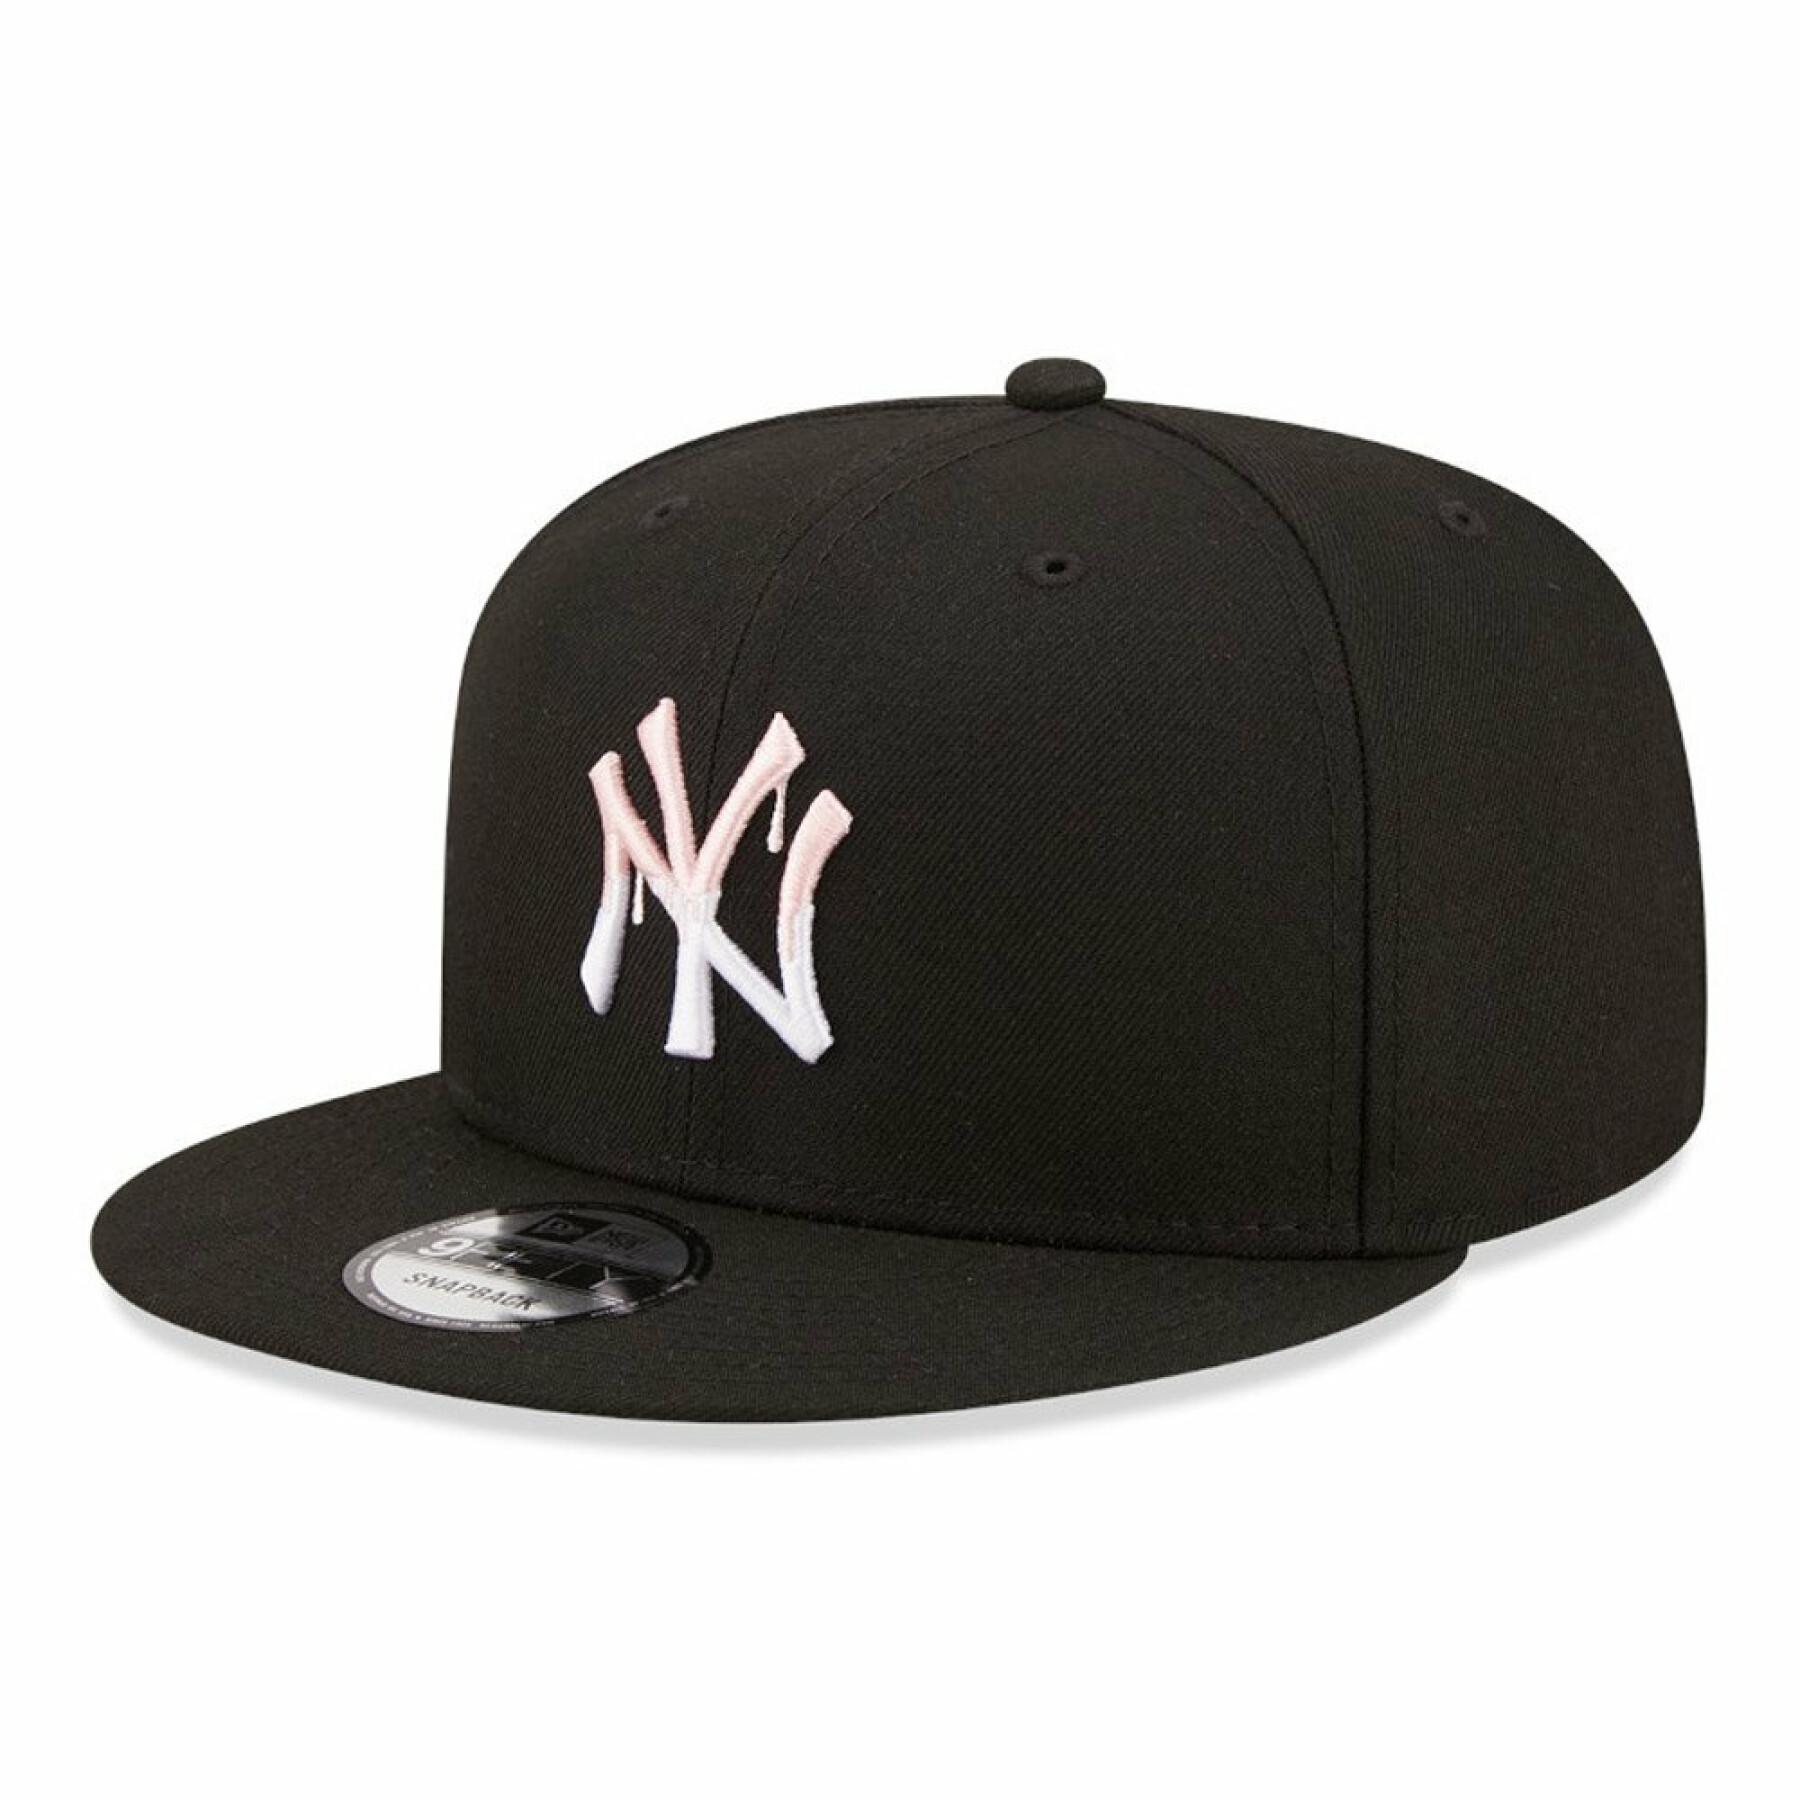 Gorra 9fifty New Era drip New York Yankees